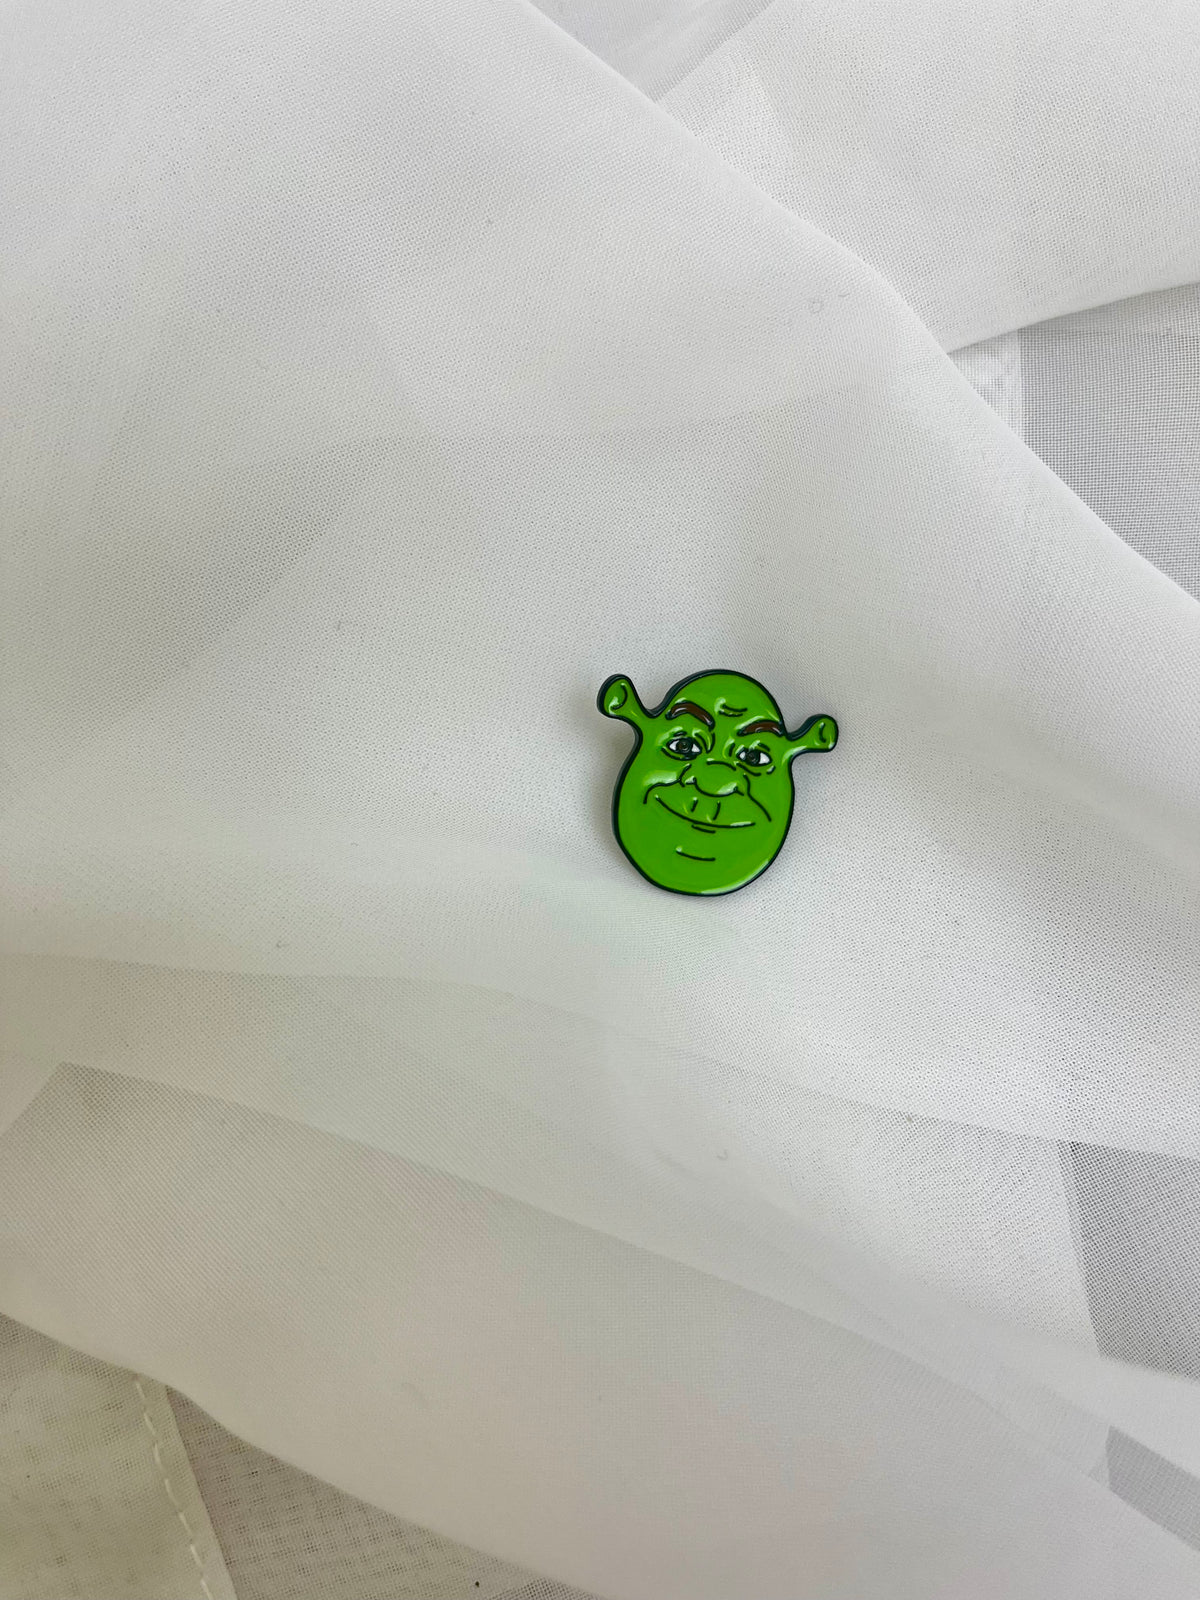 Shrek Pin